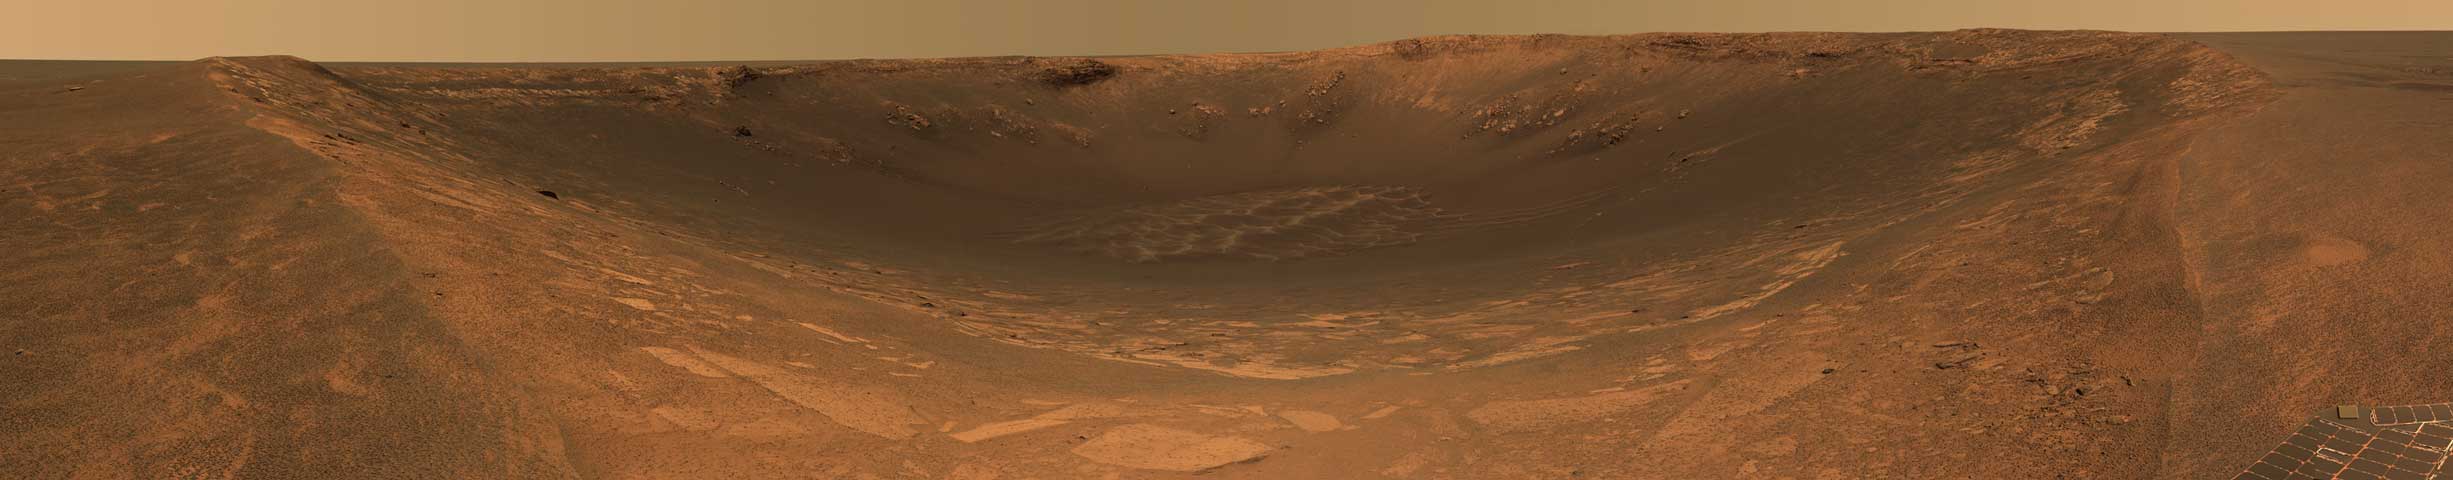 Cráter Endurance en Marte